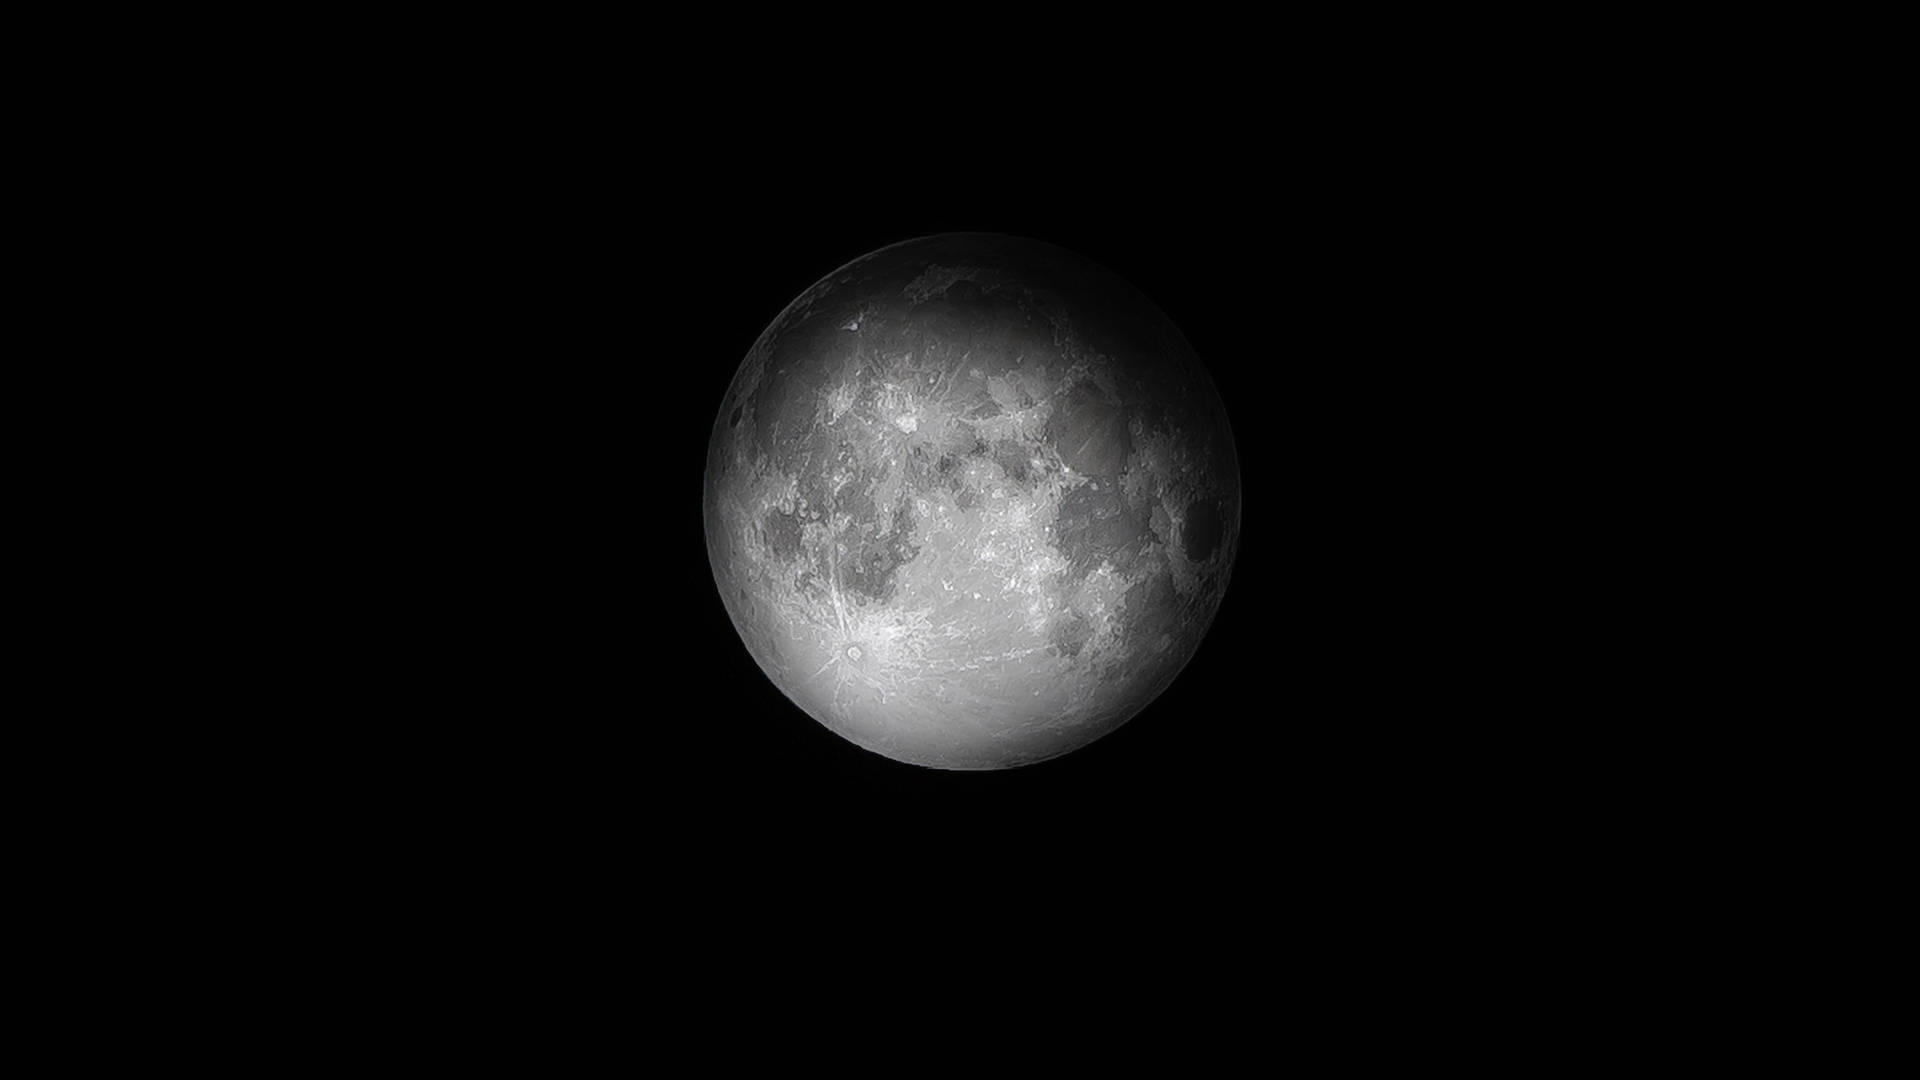 Striking Full Moon Over Pitch Black Night Sky In 4k